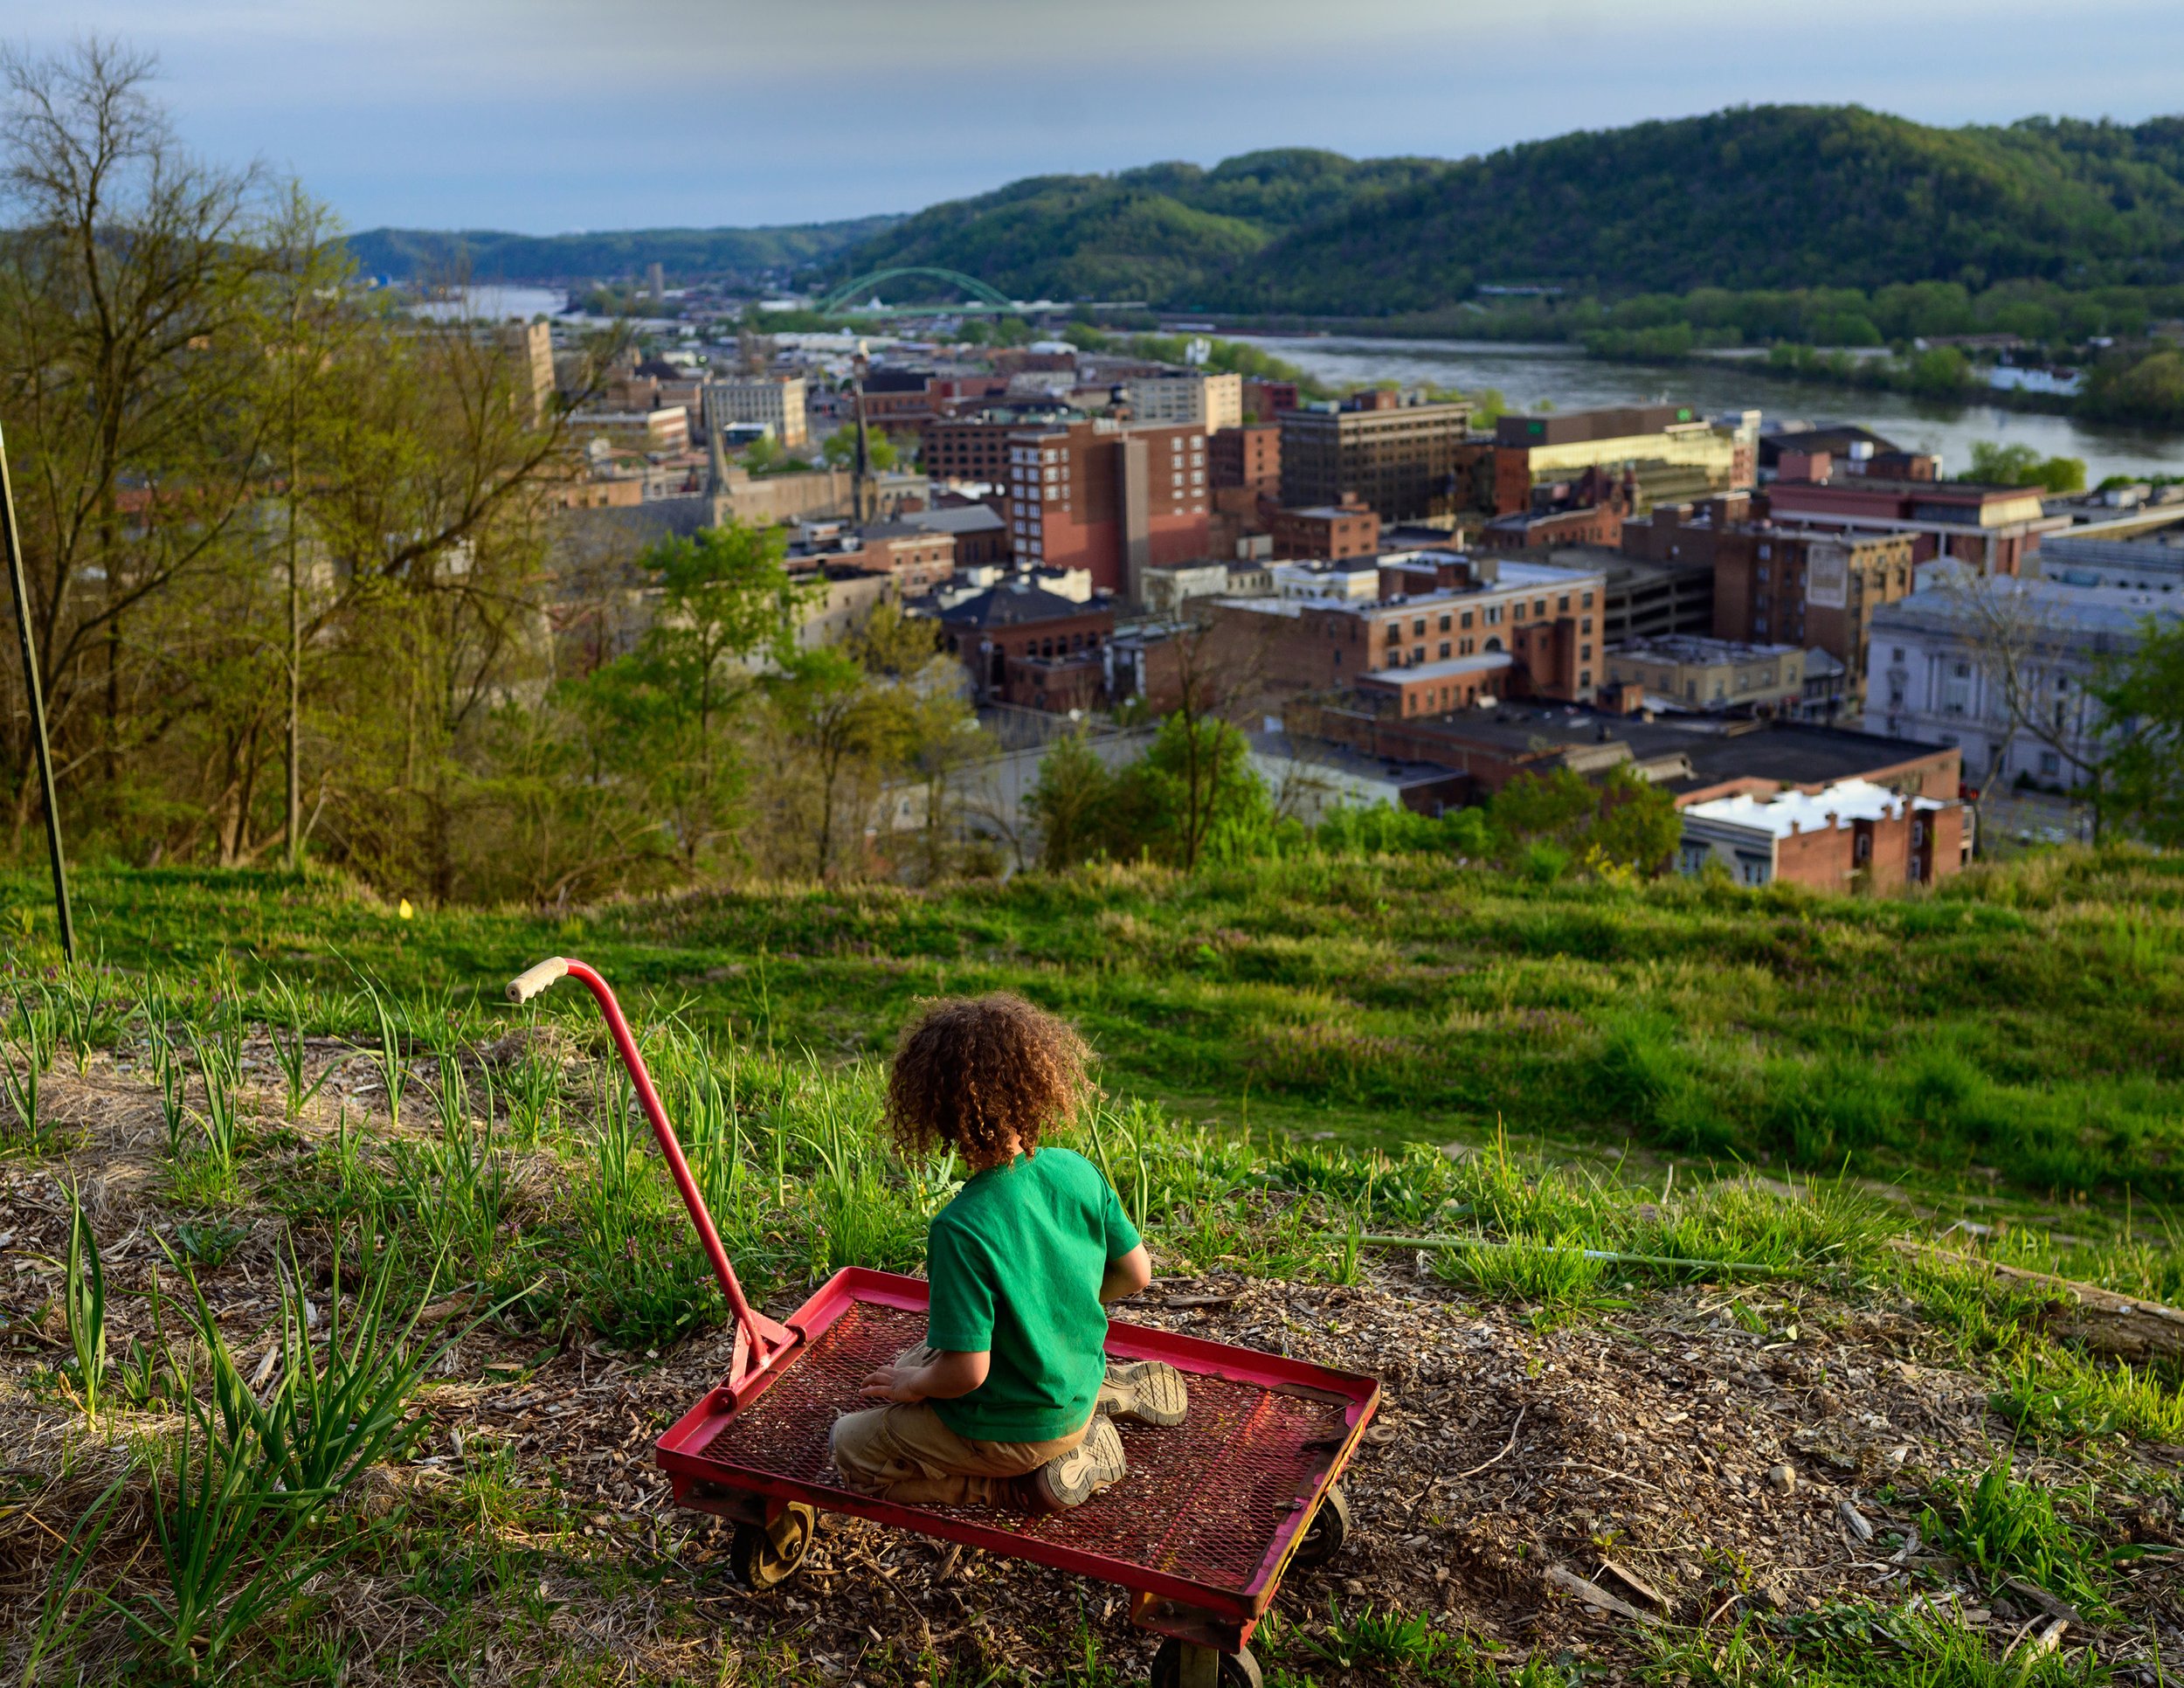 Appalachia Rising West Virginia | Building Momentum for Alternative Landscape Futures in West Virginia